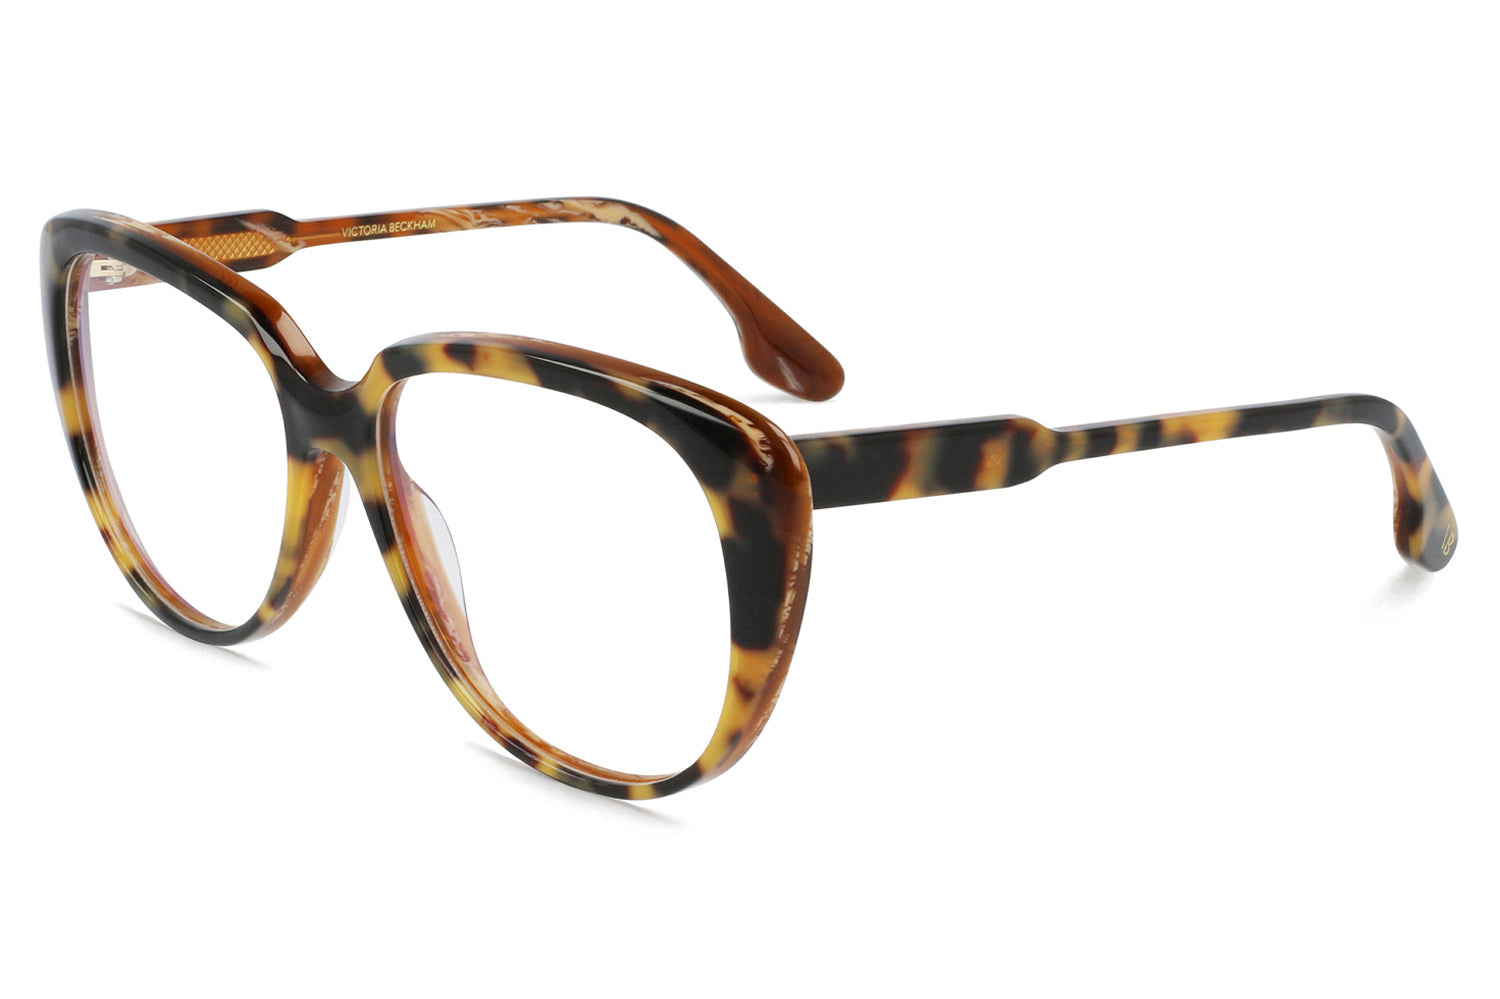 Victoria Beckham Sunglasses - tortoise/brown 